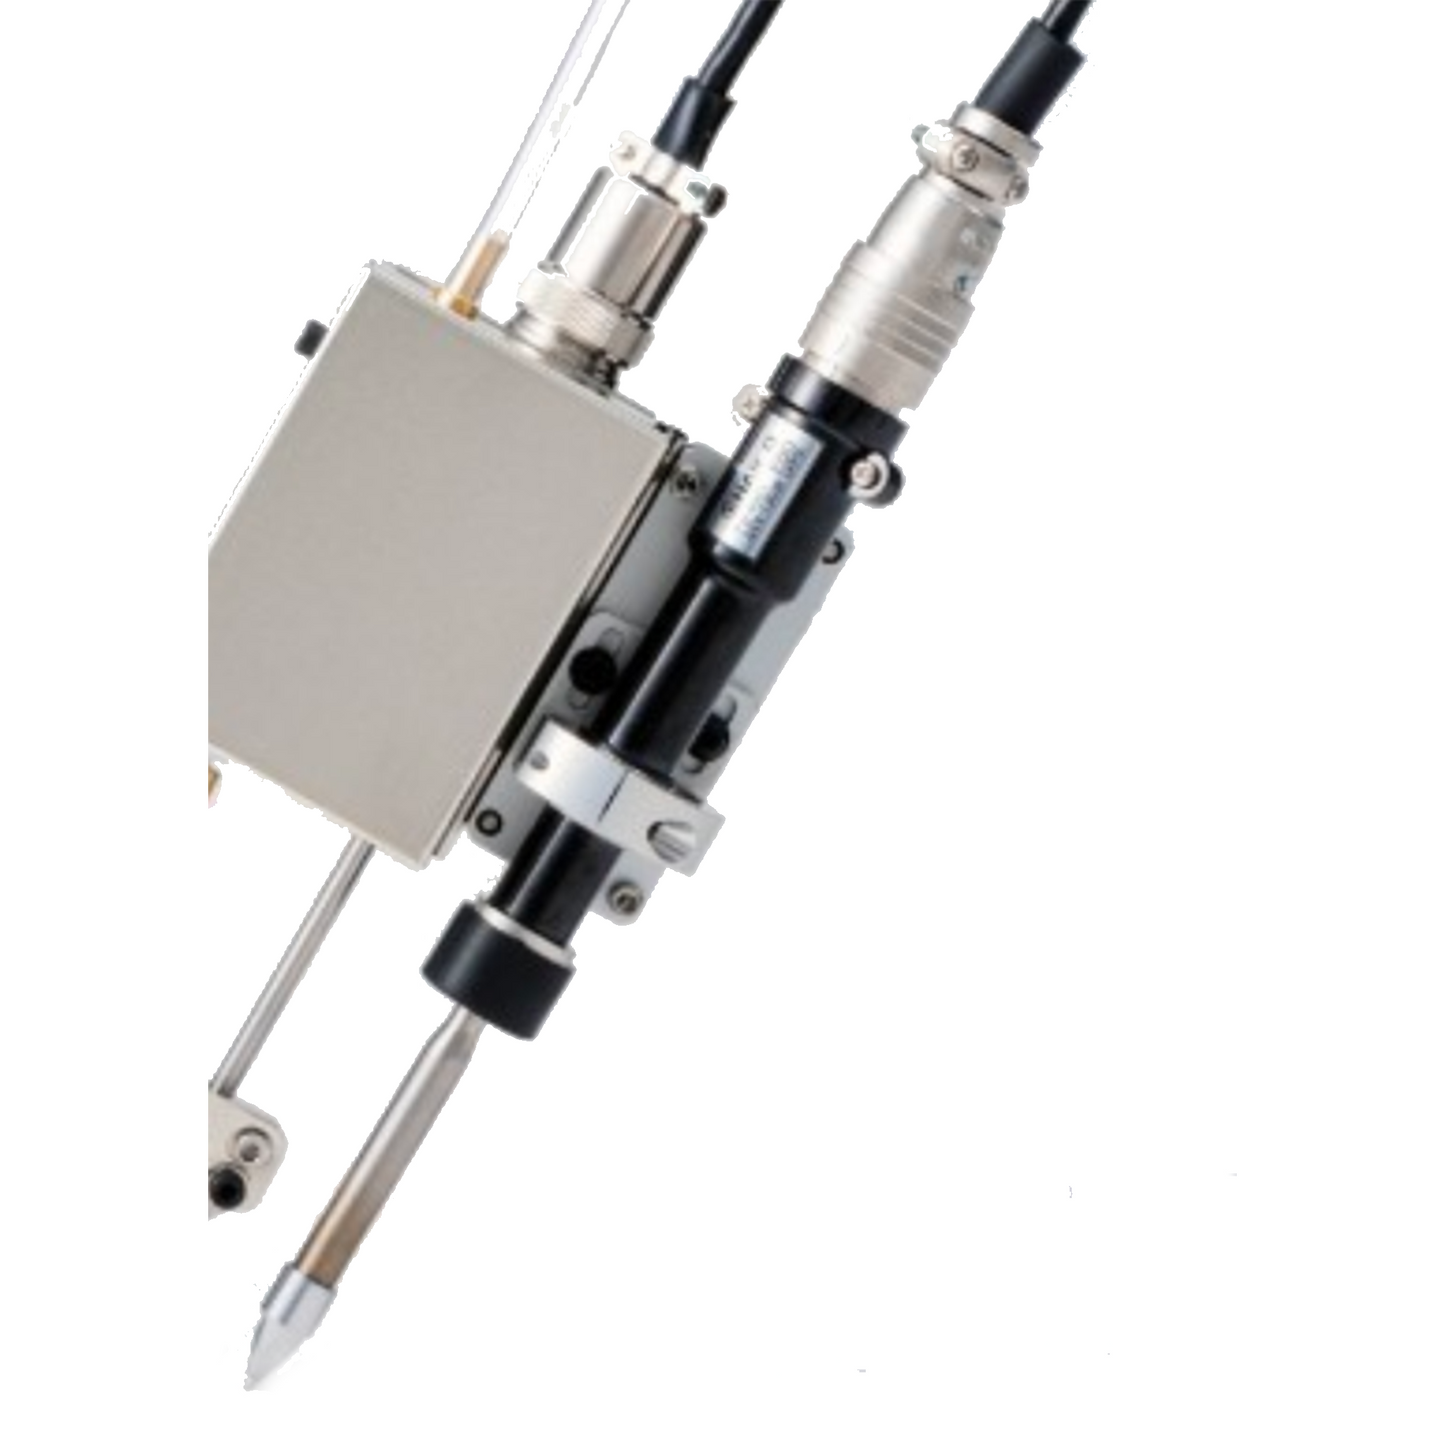 Hakko automated soldering robot system unit FU6001-01X straight soldering iron. Auto-feeder system